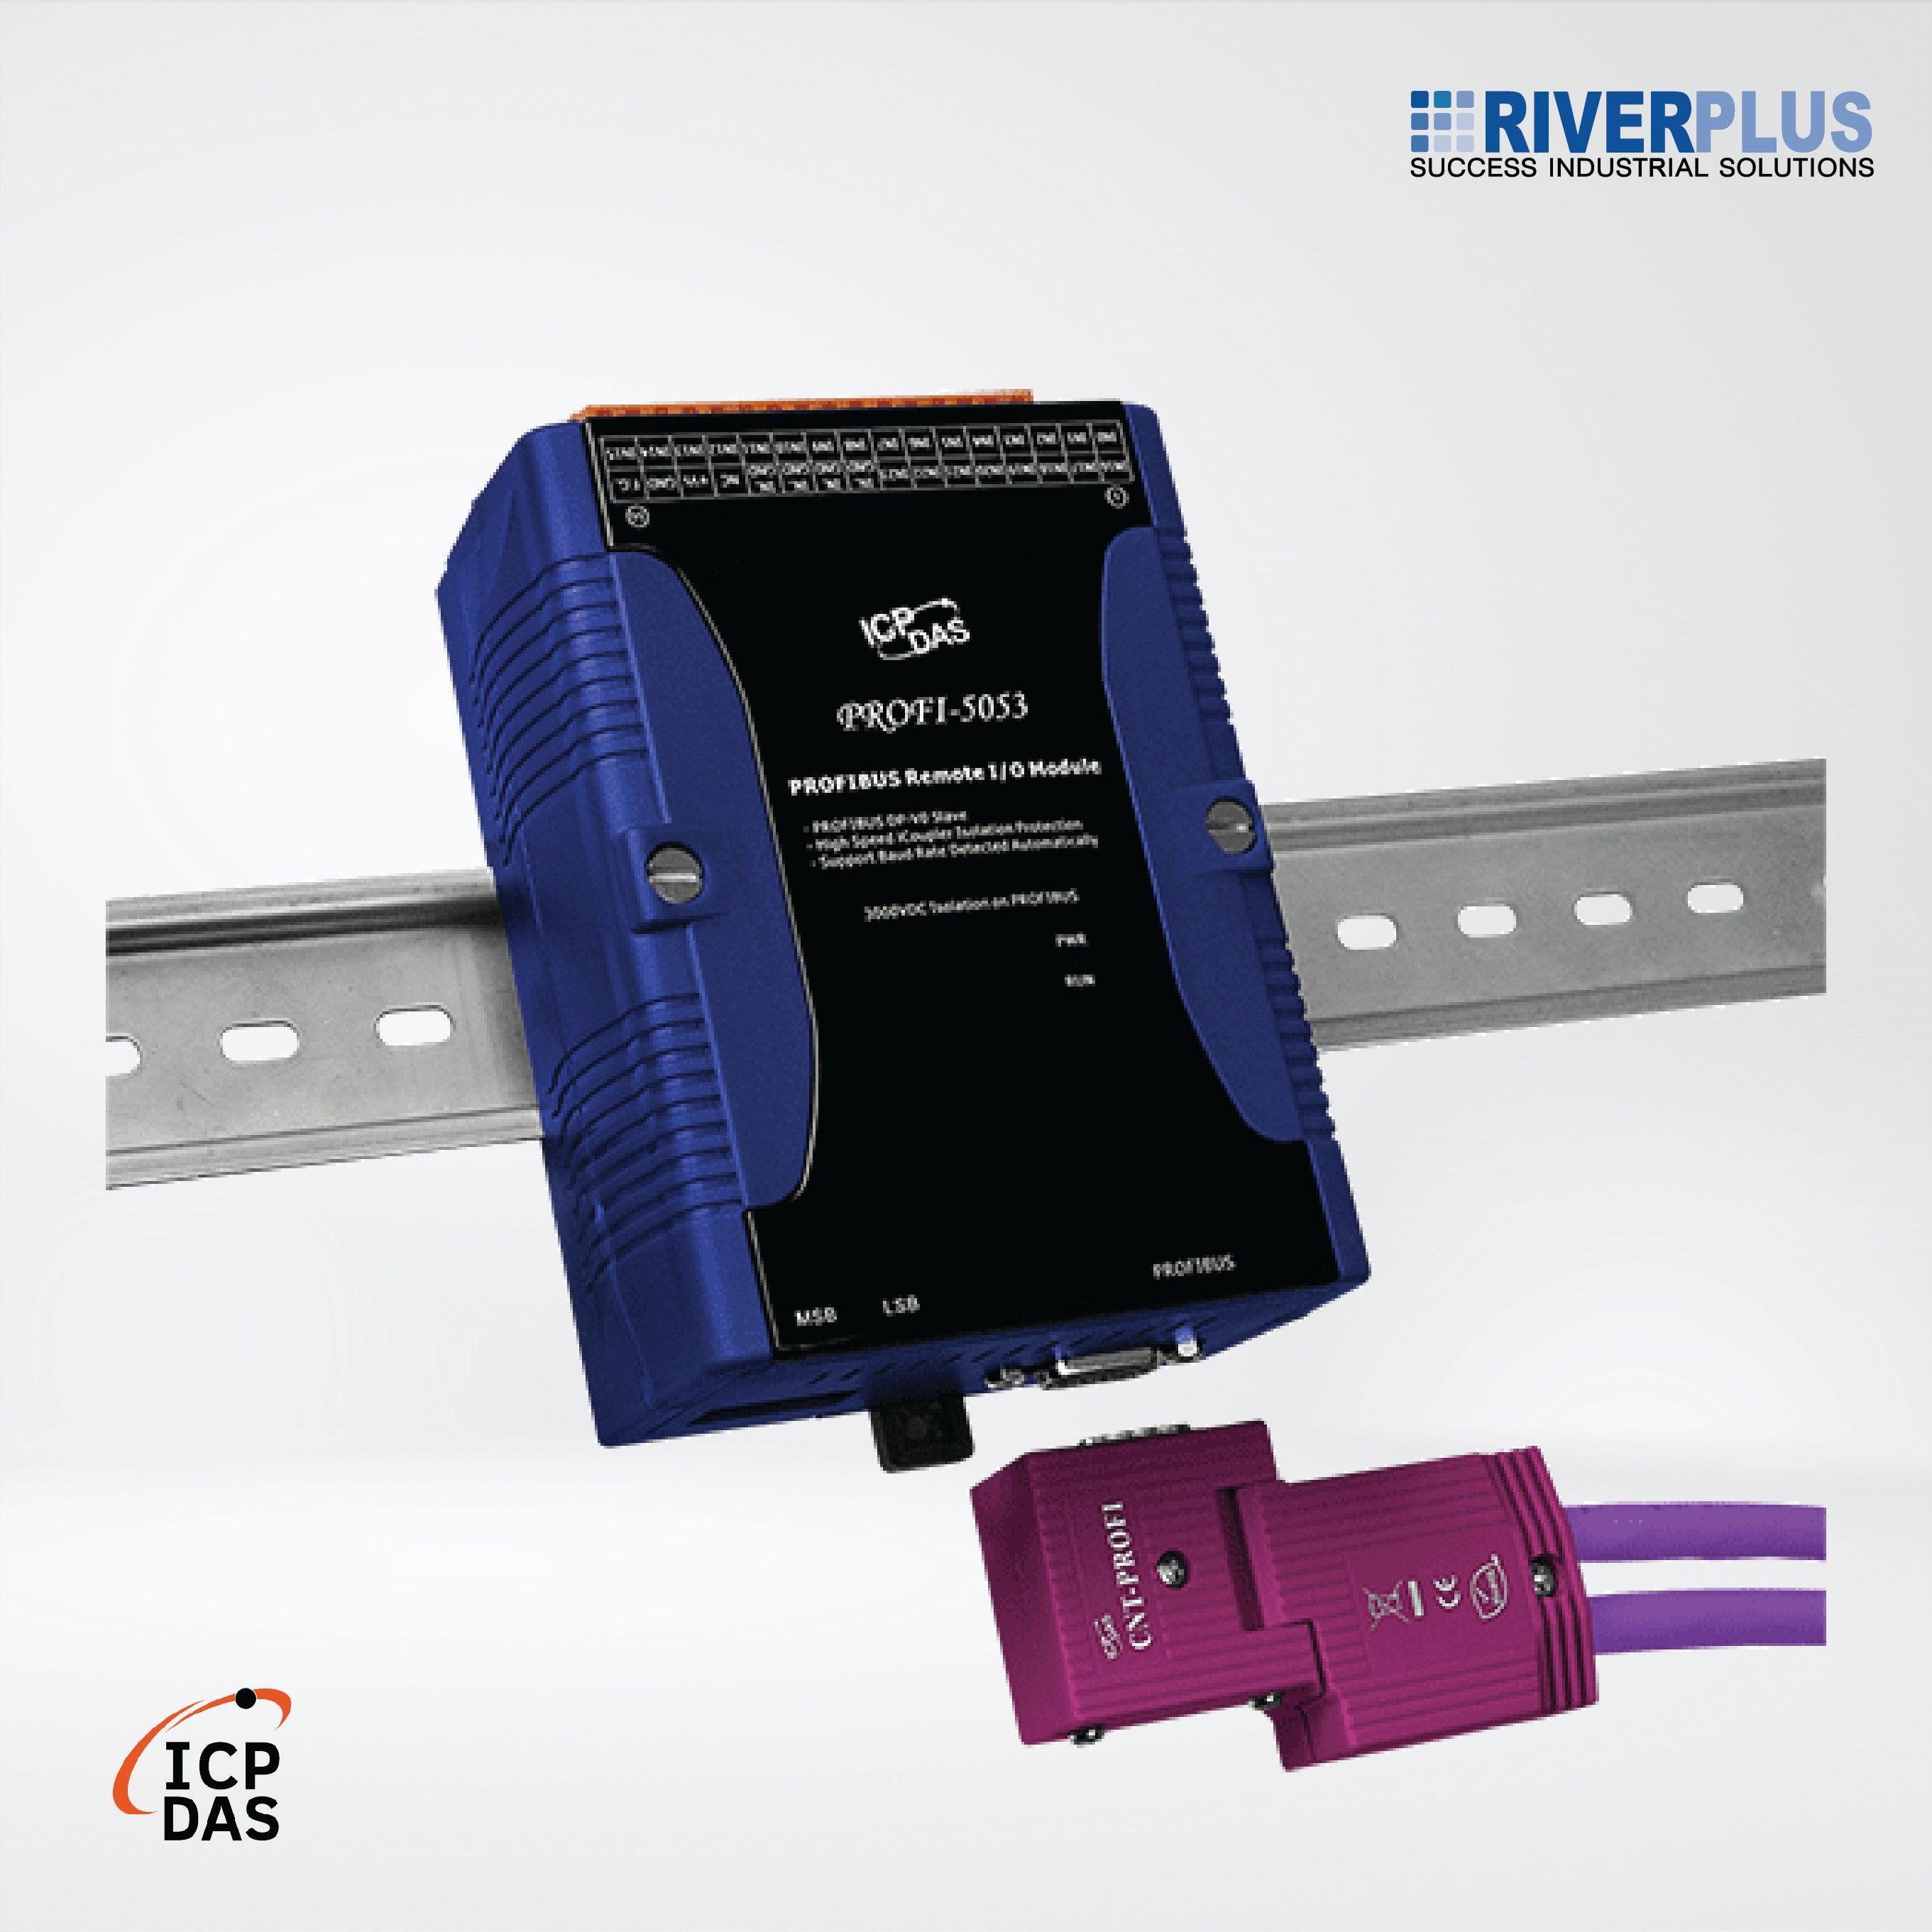 PROFI-5053 PROFIBUS Remote I/O Module (24-channels Dry Contact Non-Isolated Digital Input) - Riverplus